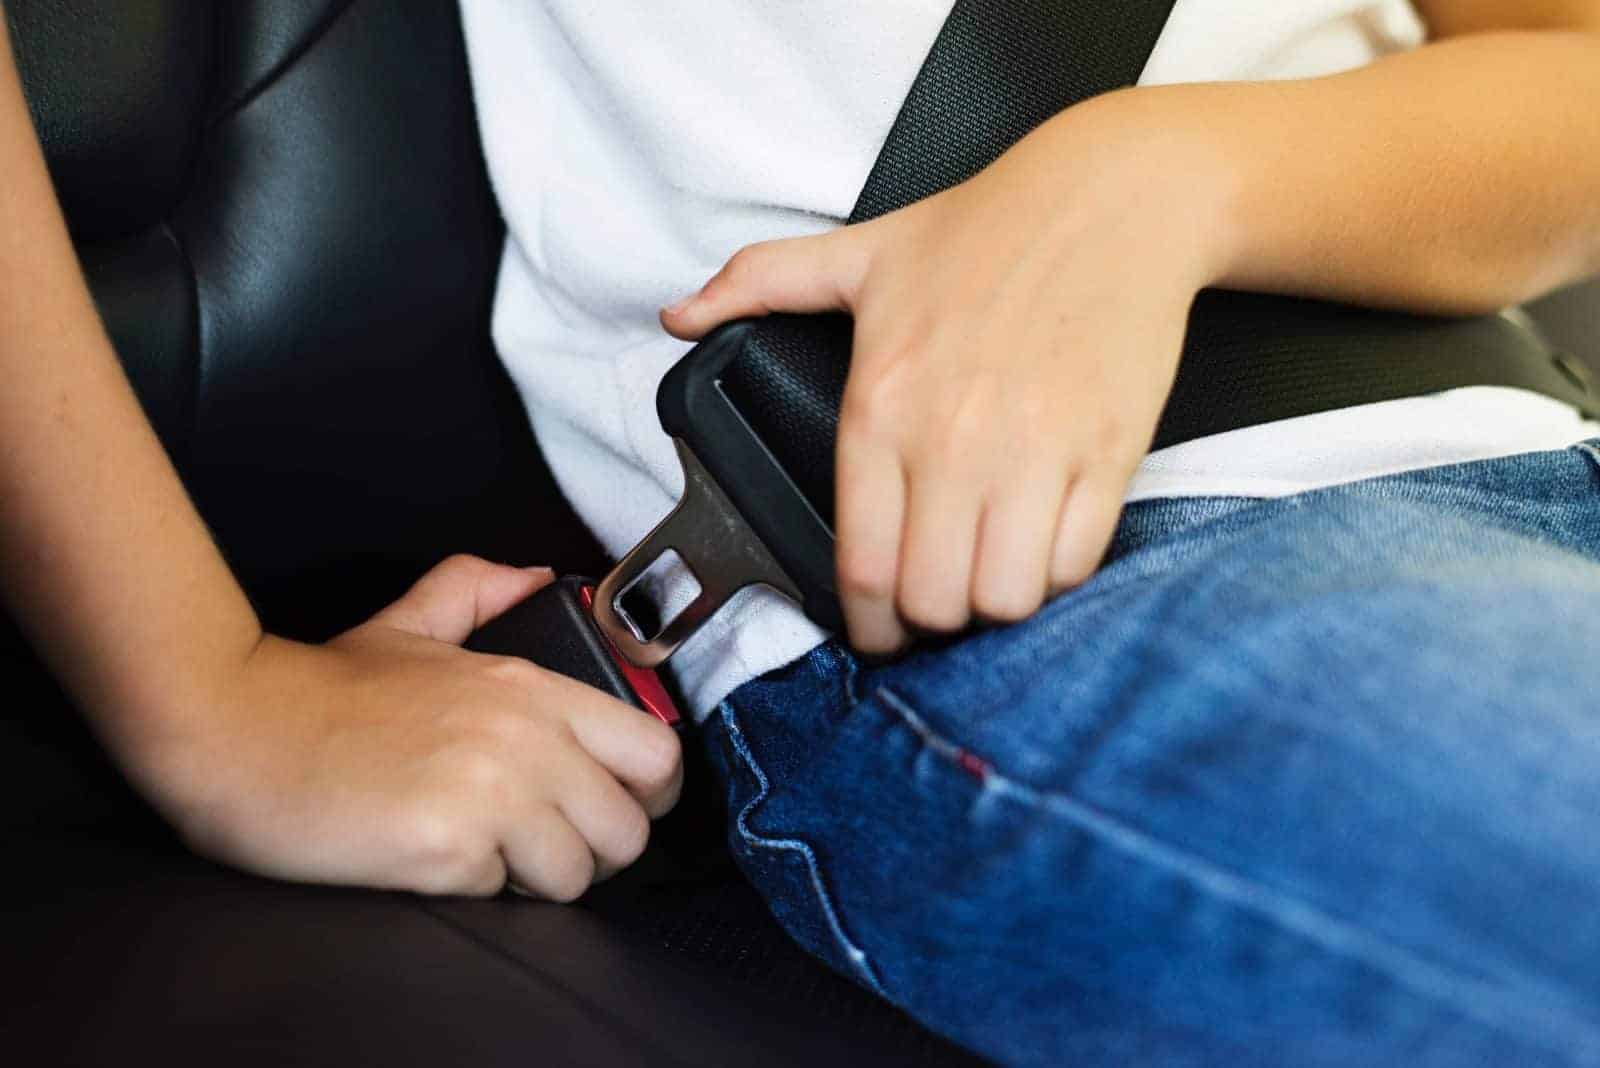 A child putting on a seat belt